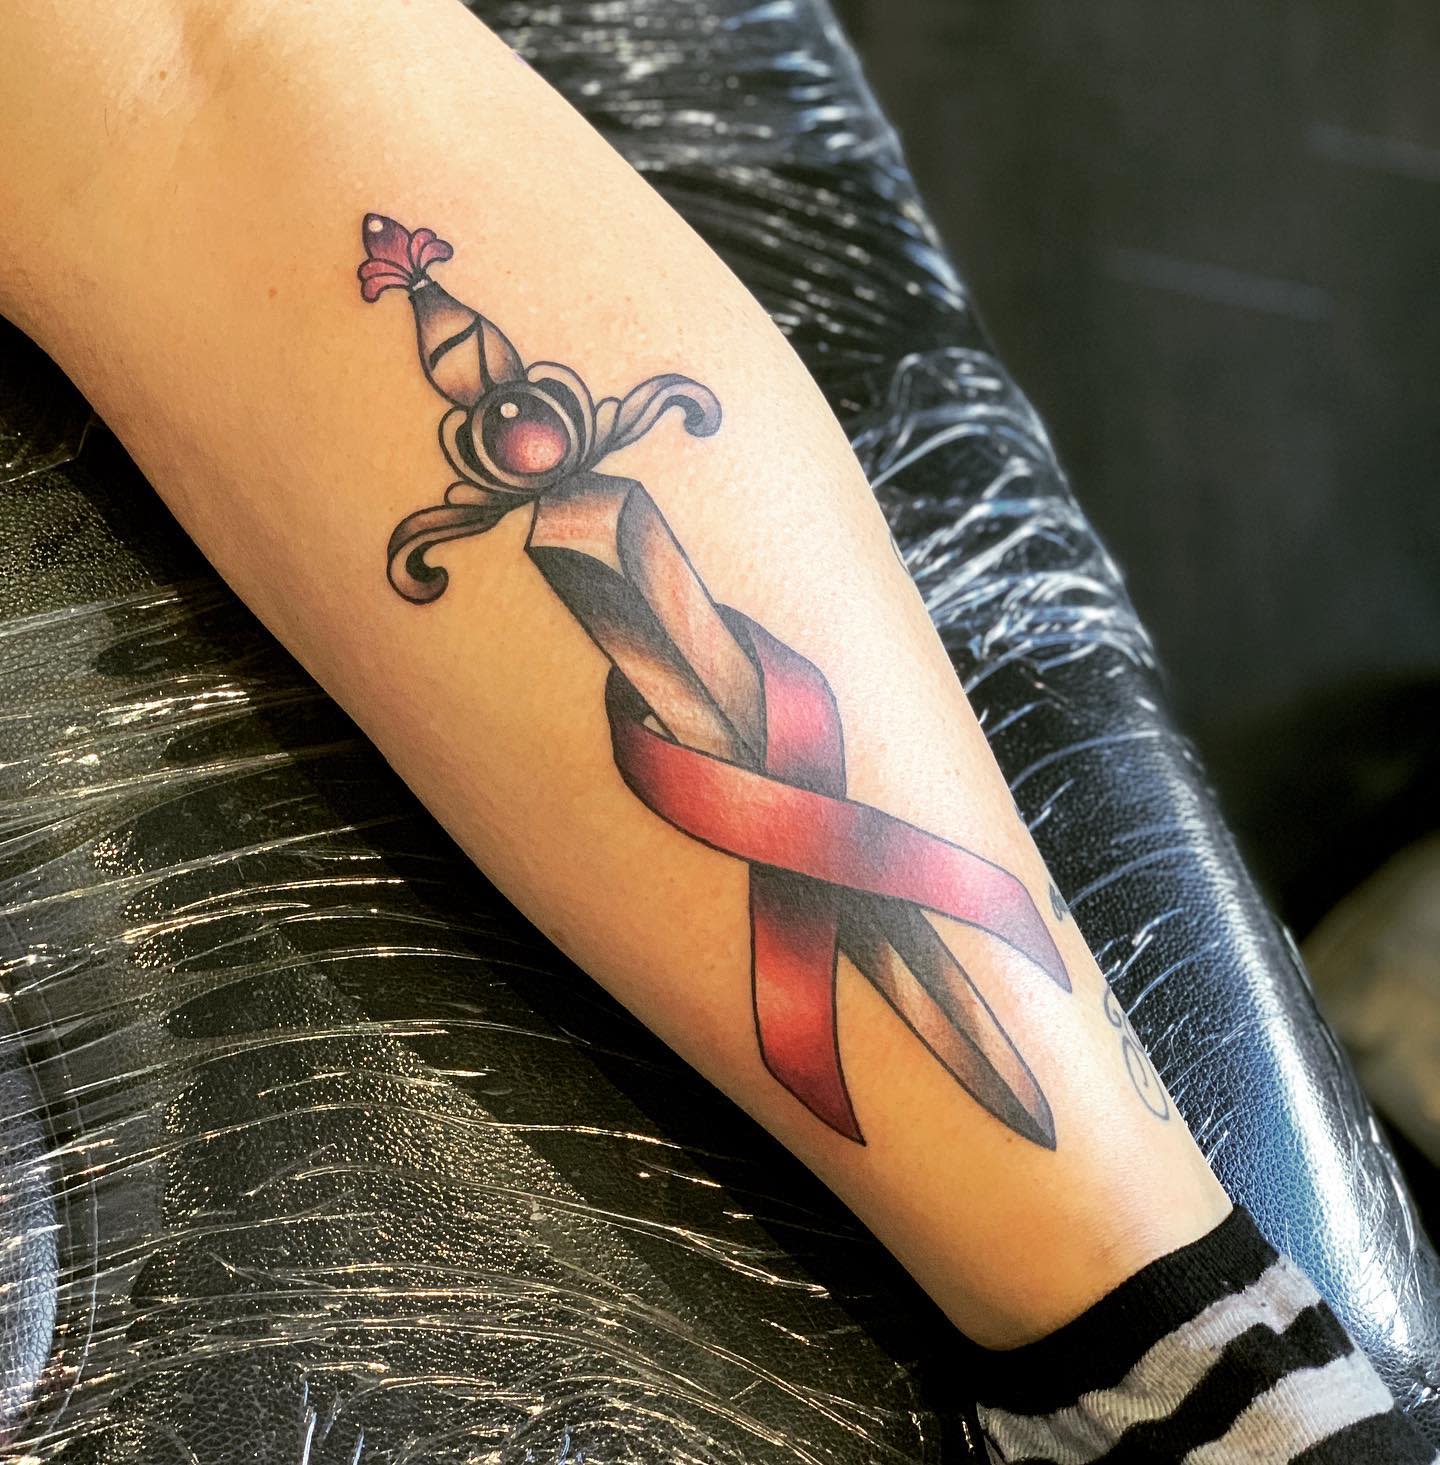 Cancer Survivor Tattoo Ideas For Men Photos